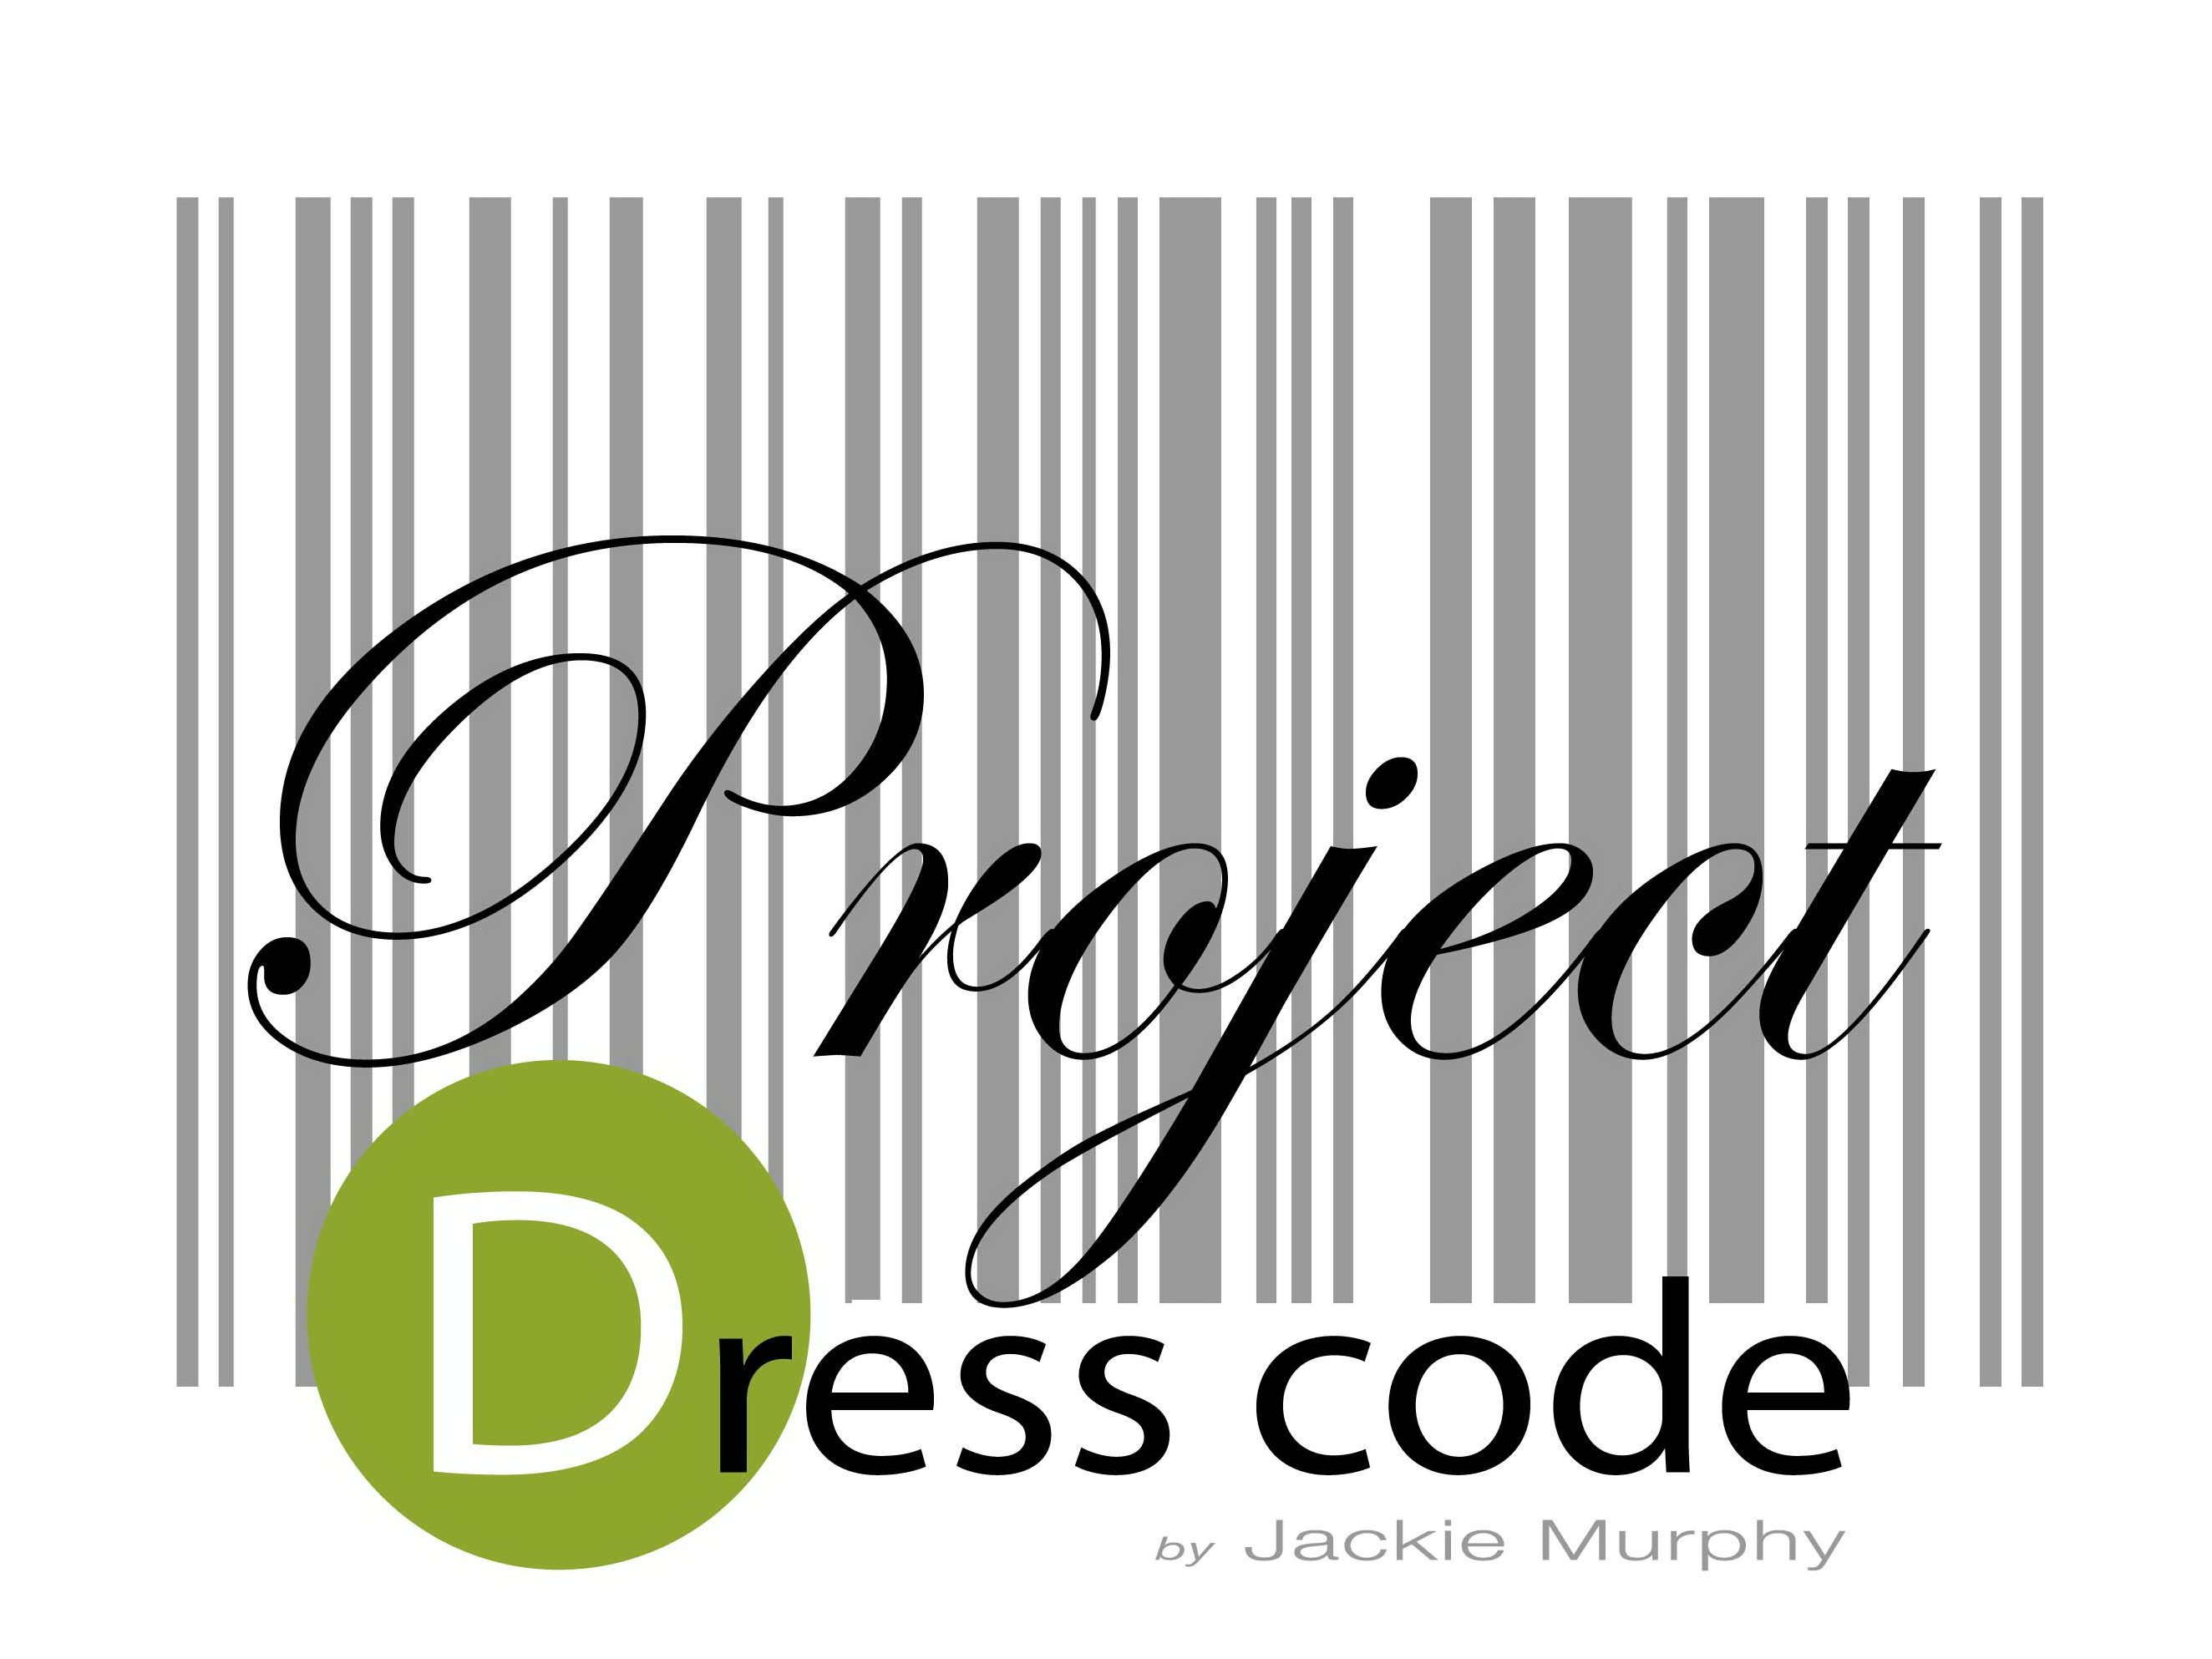  PROJECT DRESS CODE BY JACKIE MURPHY